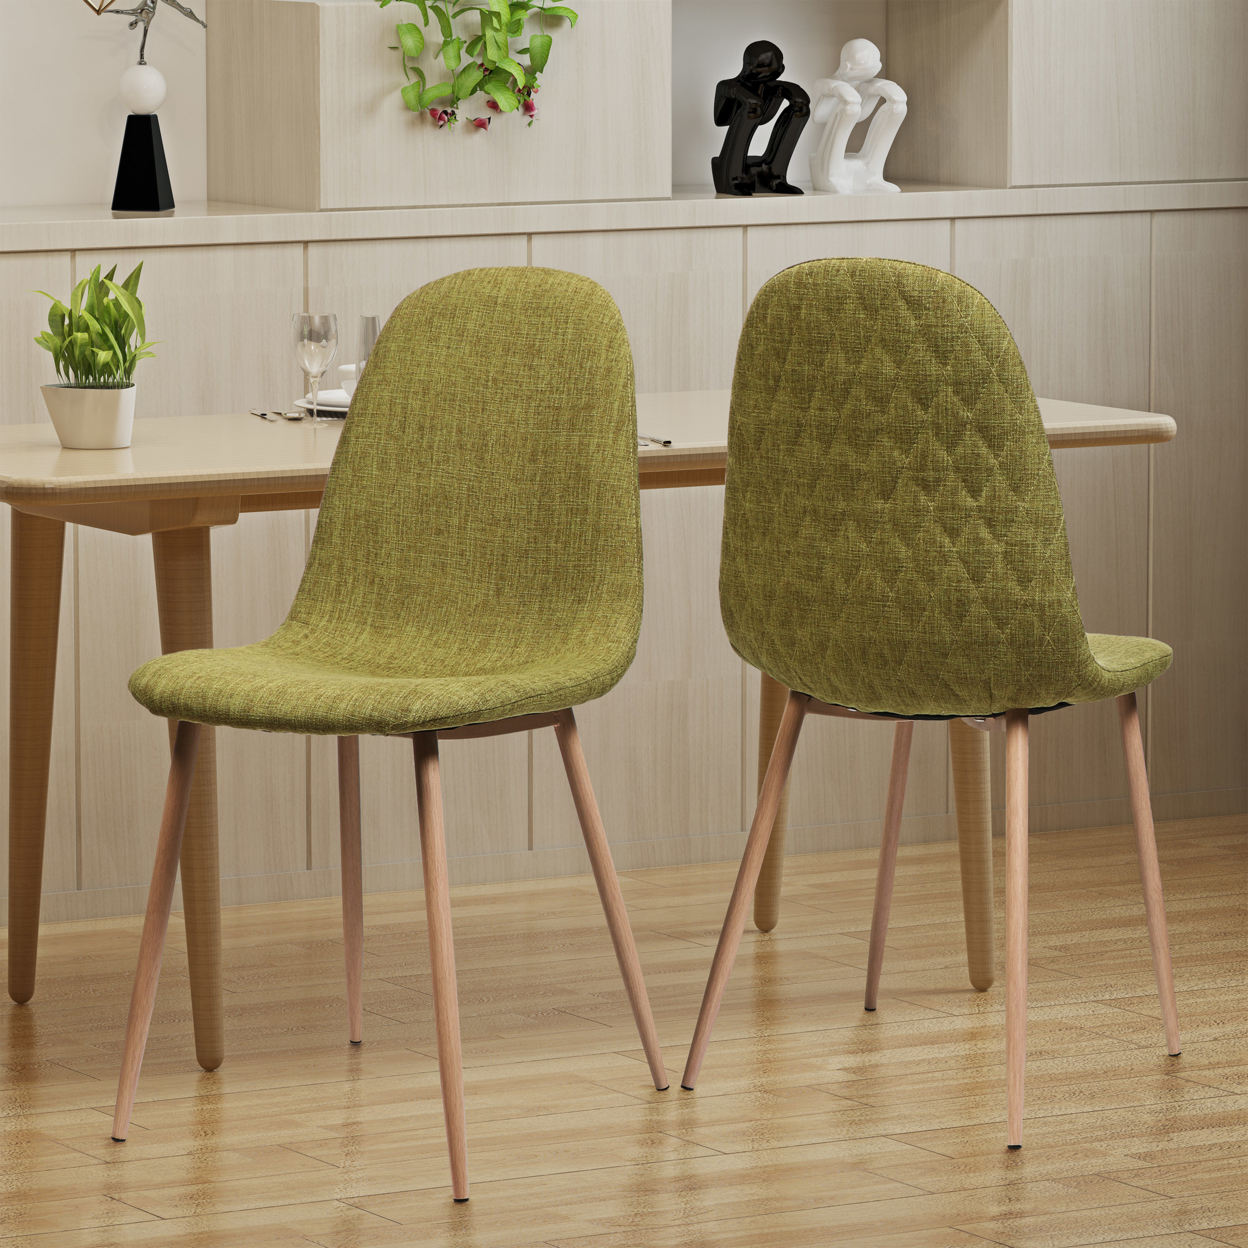 Camden Mid Century Fabric Dining Chairs With Wood Finished Legs - Set Of 2 - Light Gray/Dark Walnut